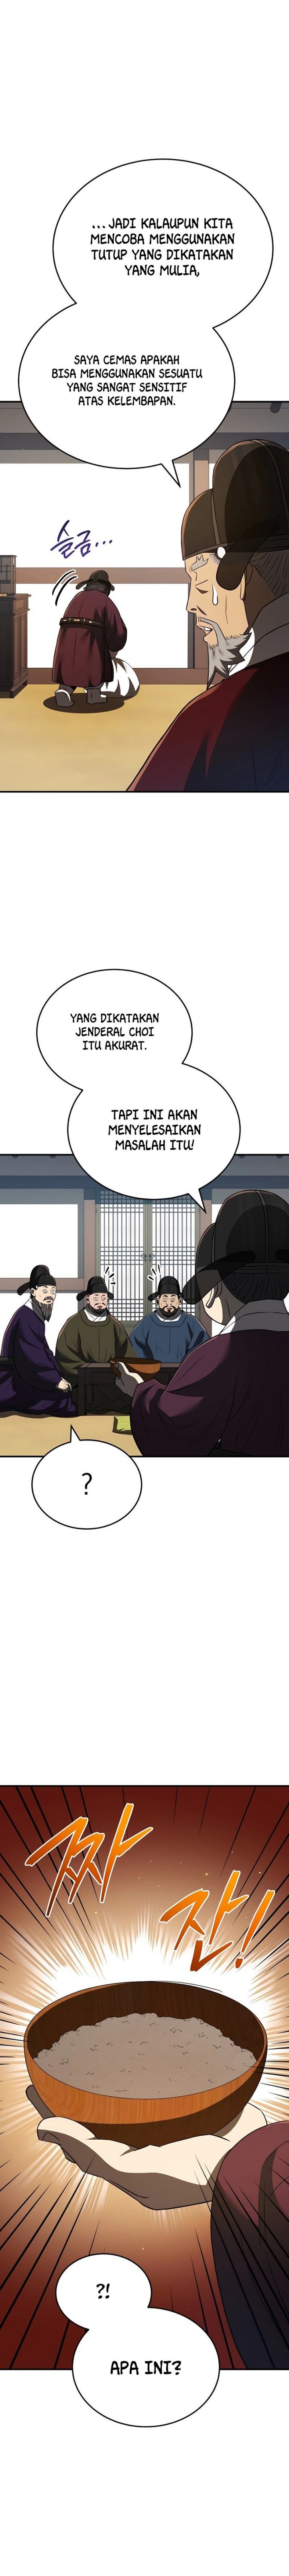 Black Corporation: Joseon Chapter 35